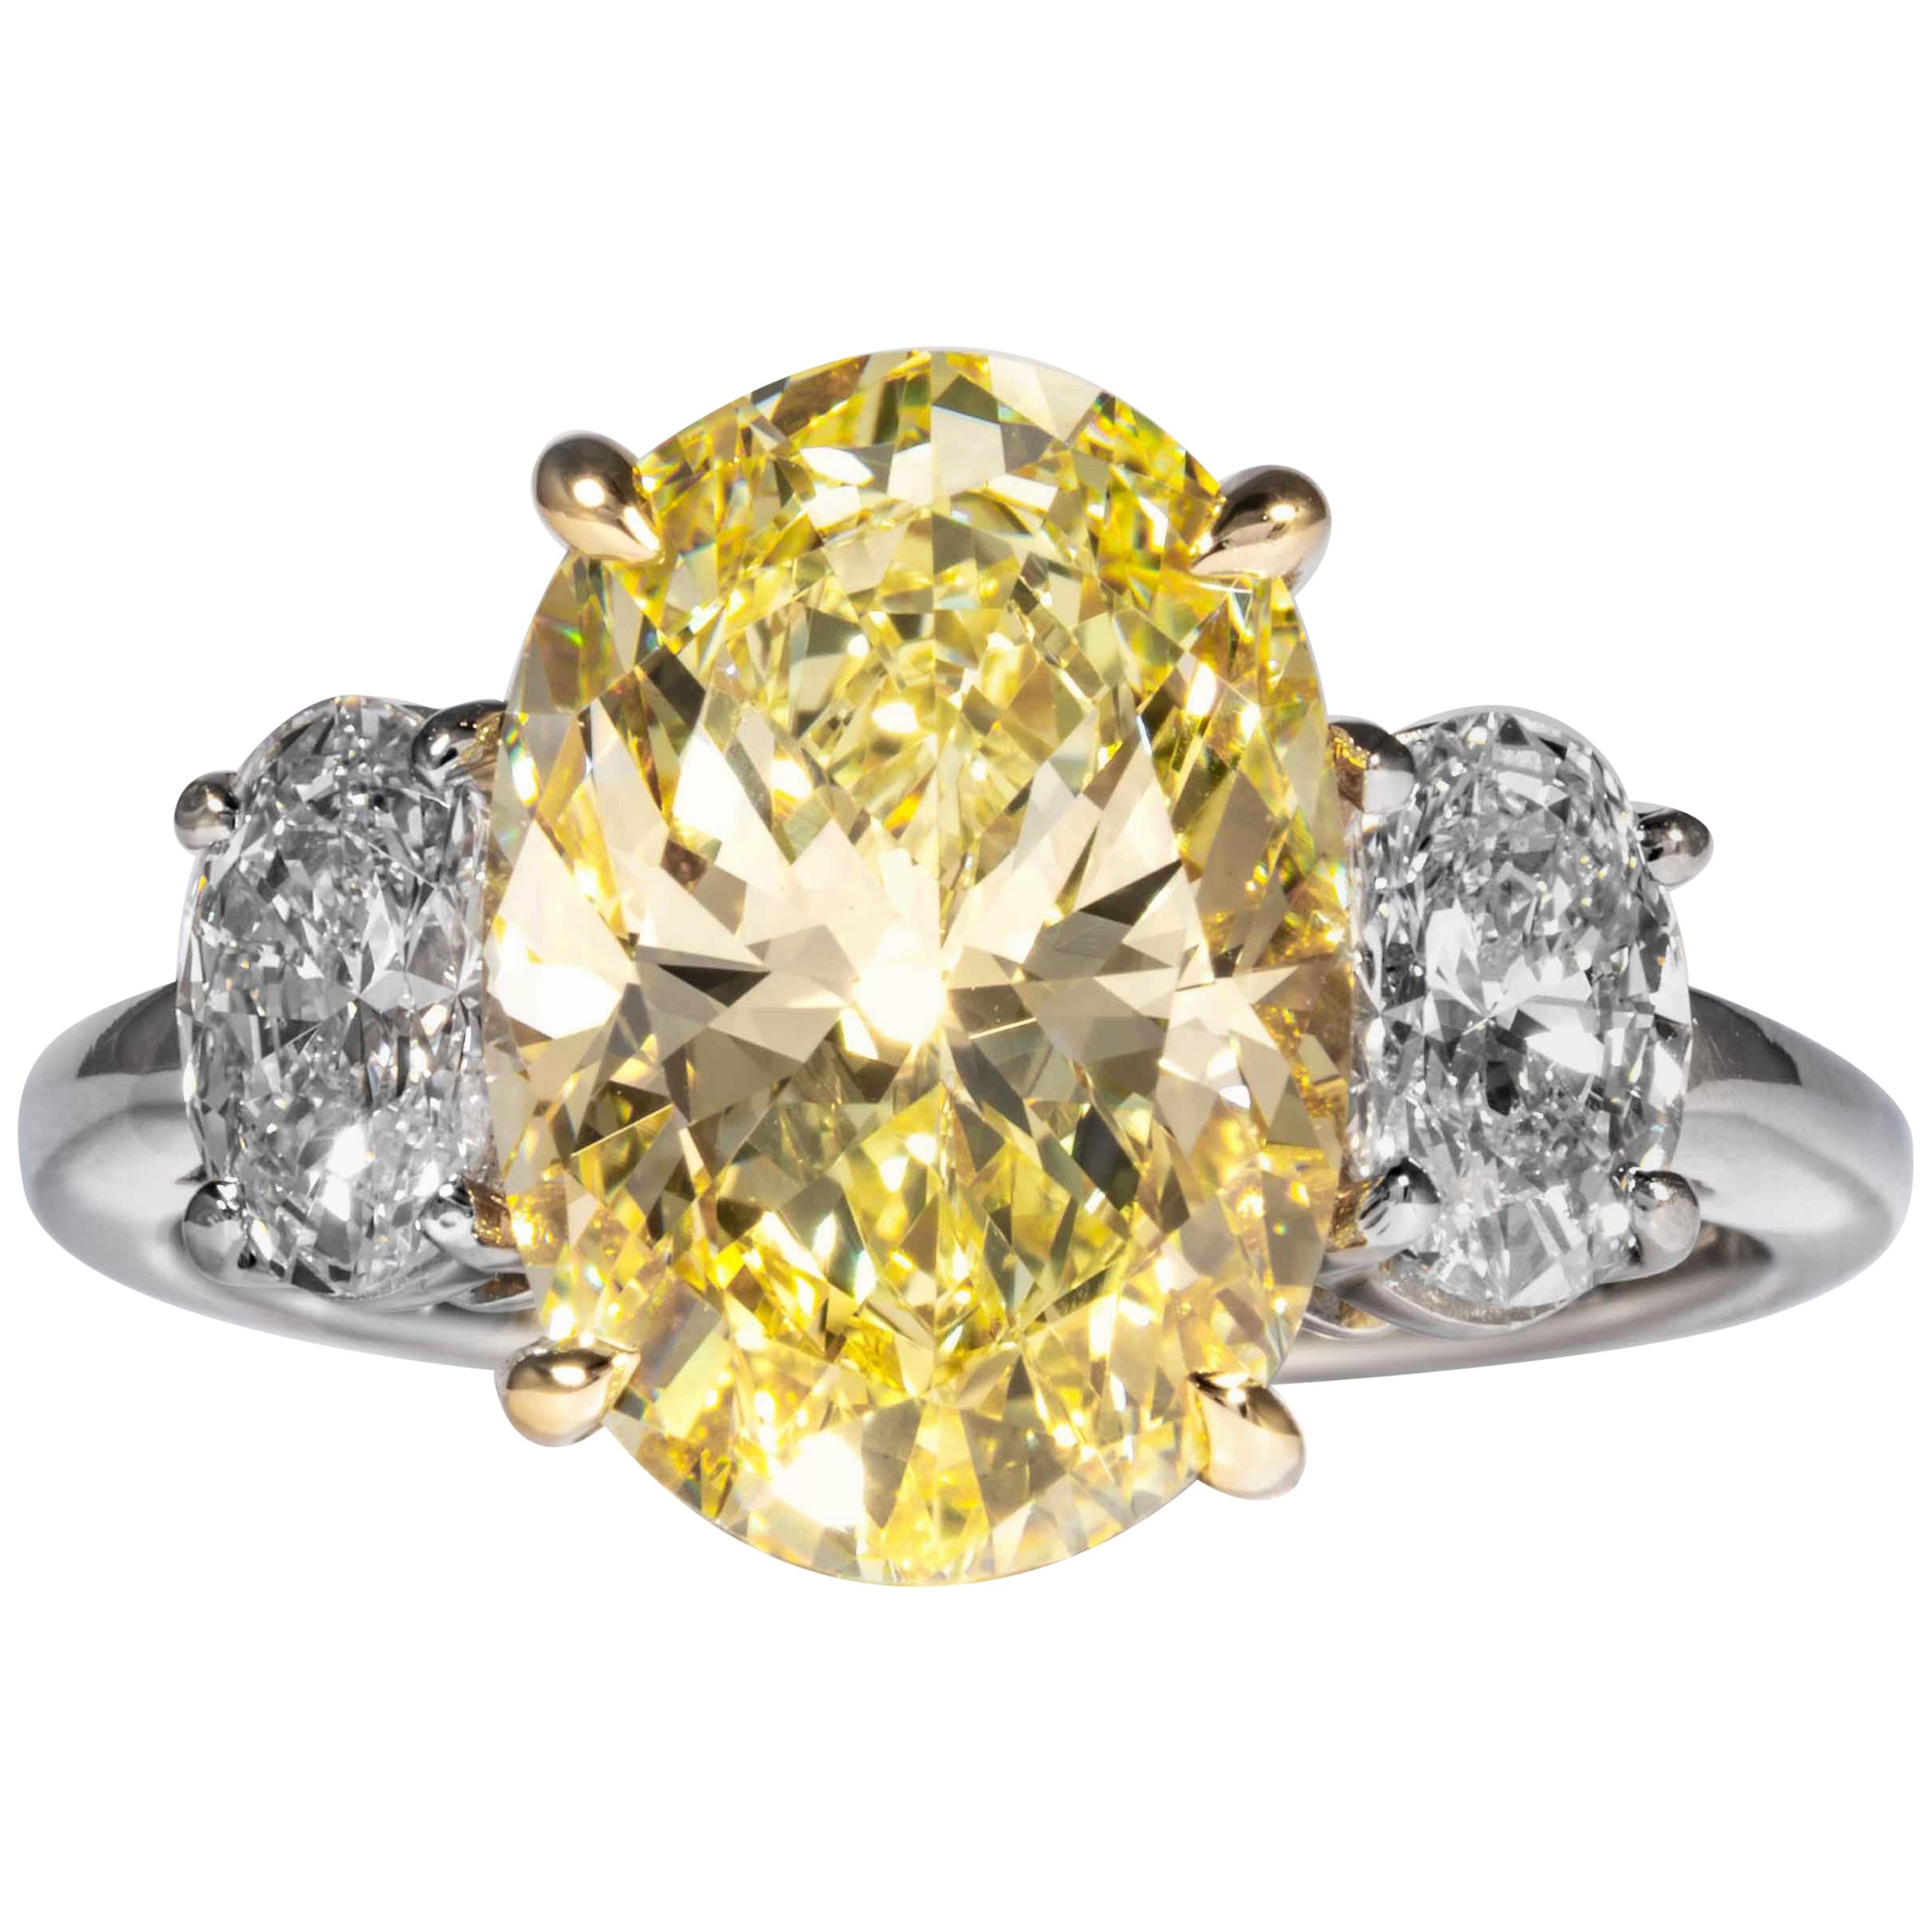 Shreve, Crump & Low GIA Certified 4.55 Carat Fancy Yellow Oval Diamond Ring